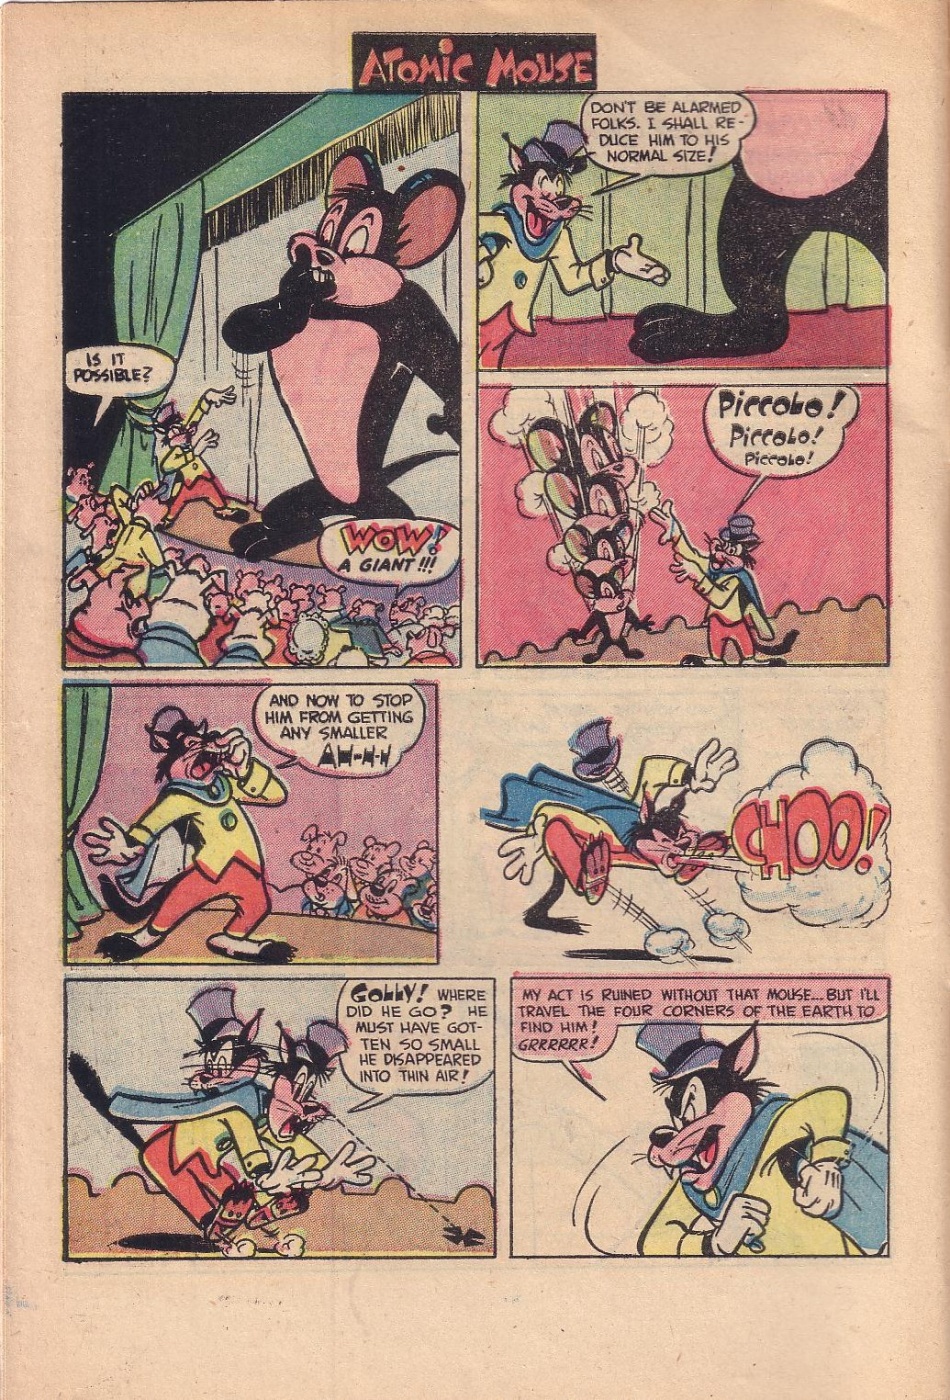 Atomic Mouse Comics - Funny Comics (8)